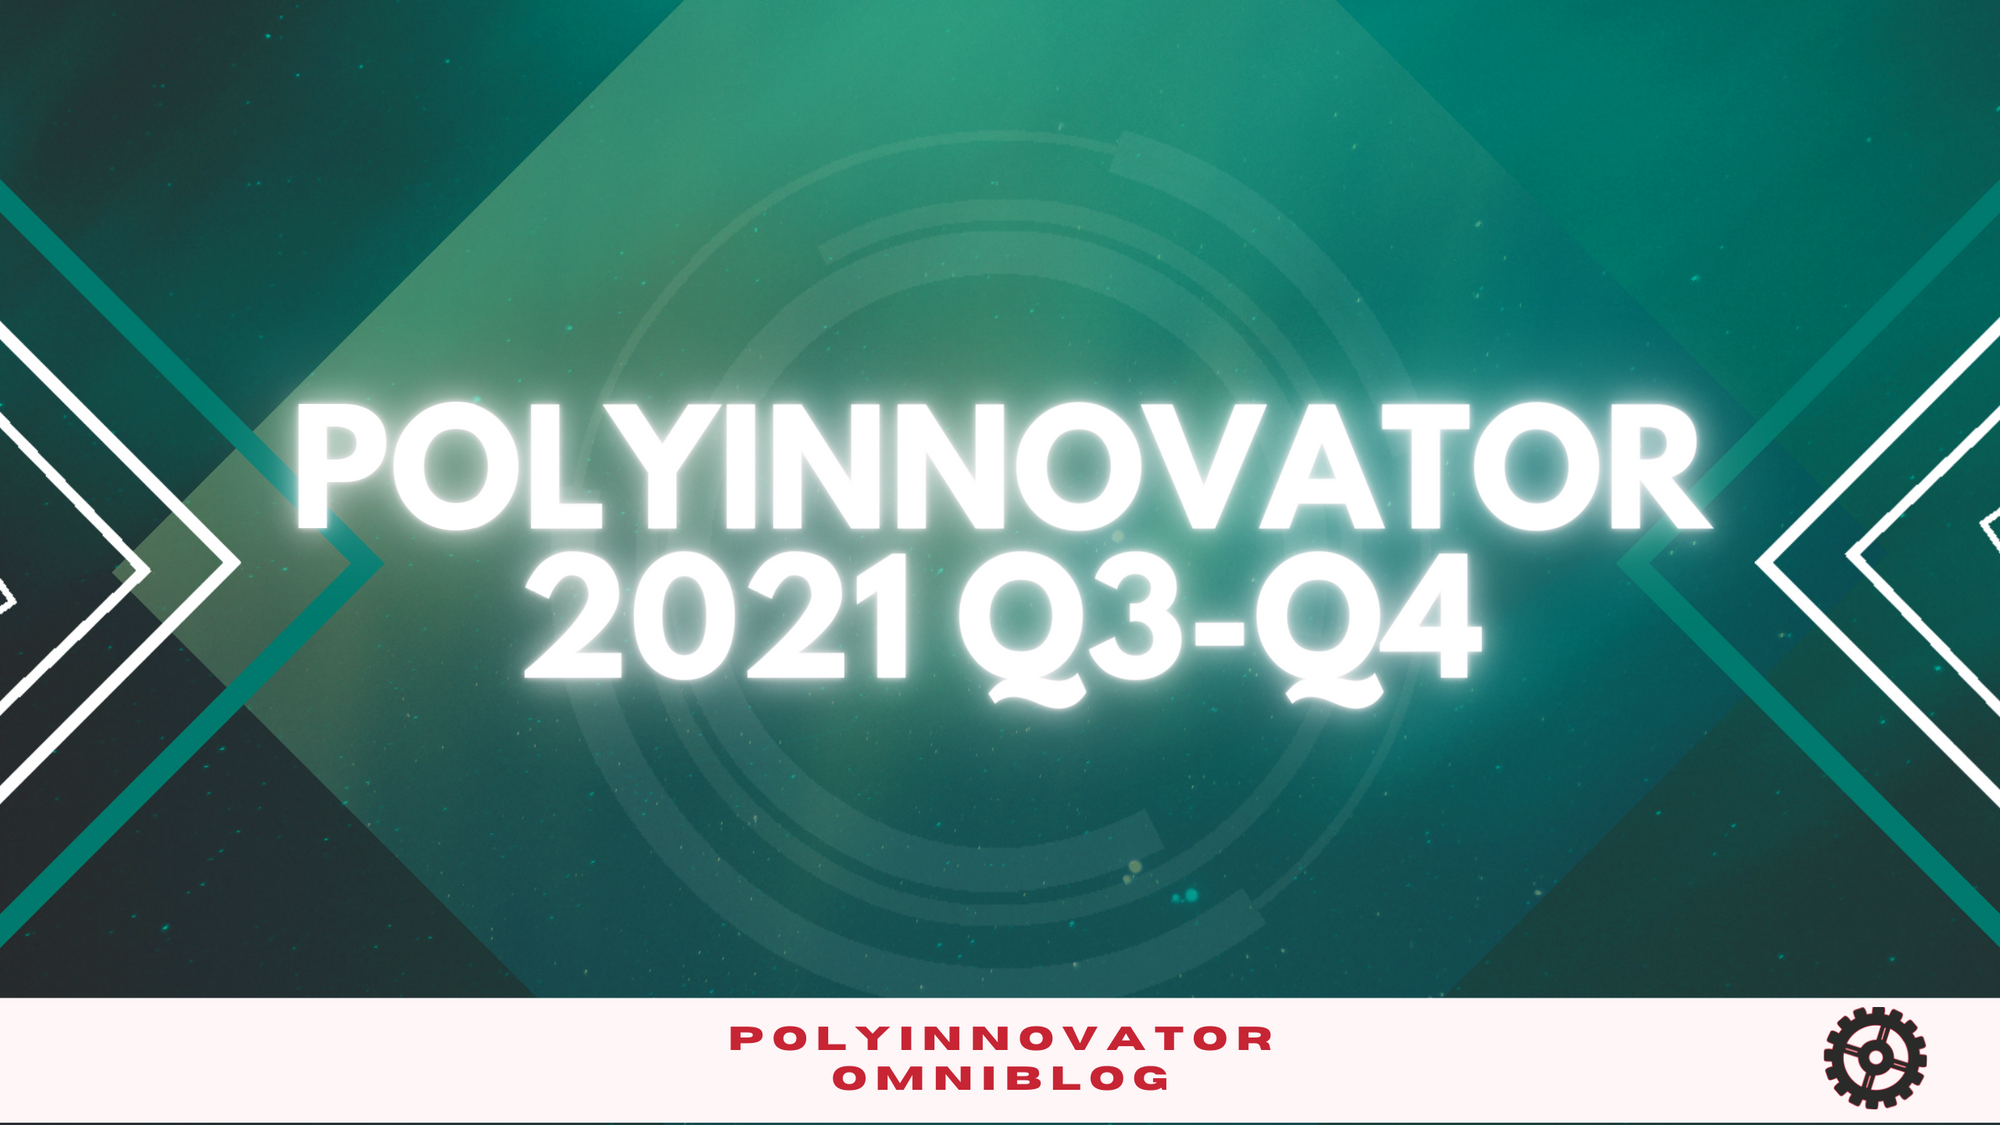 PolyInnovator 2021 Q3-Q4